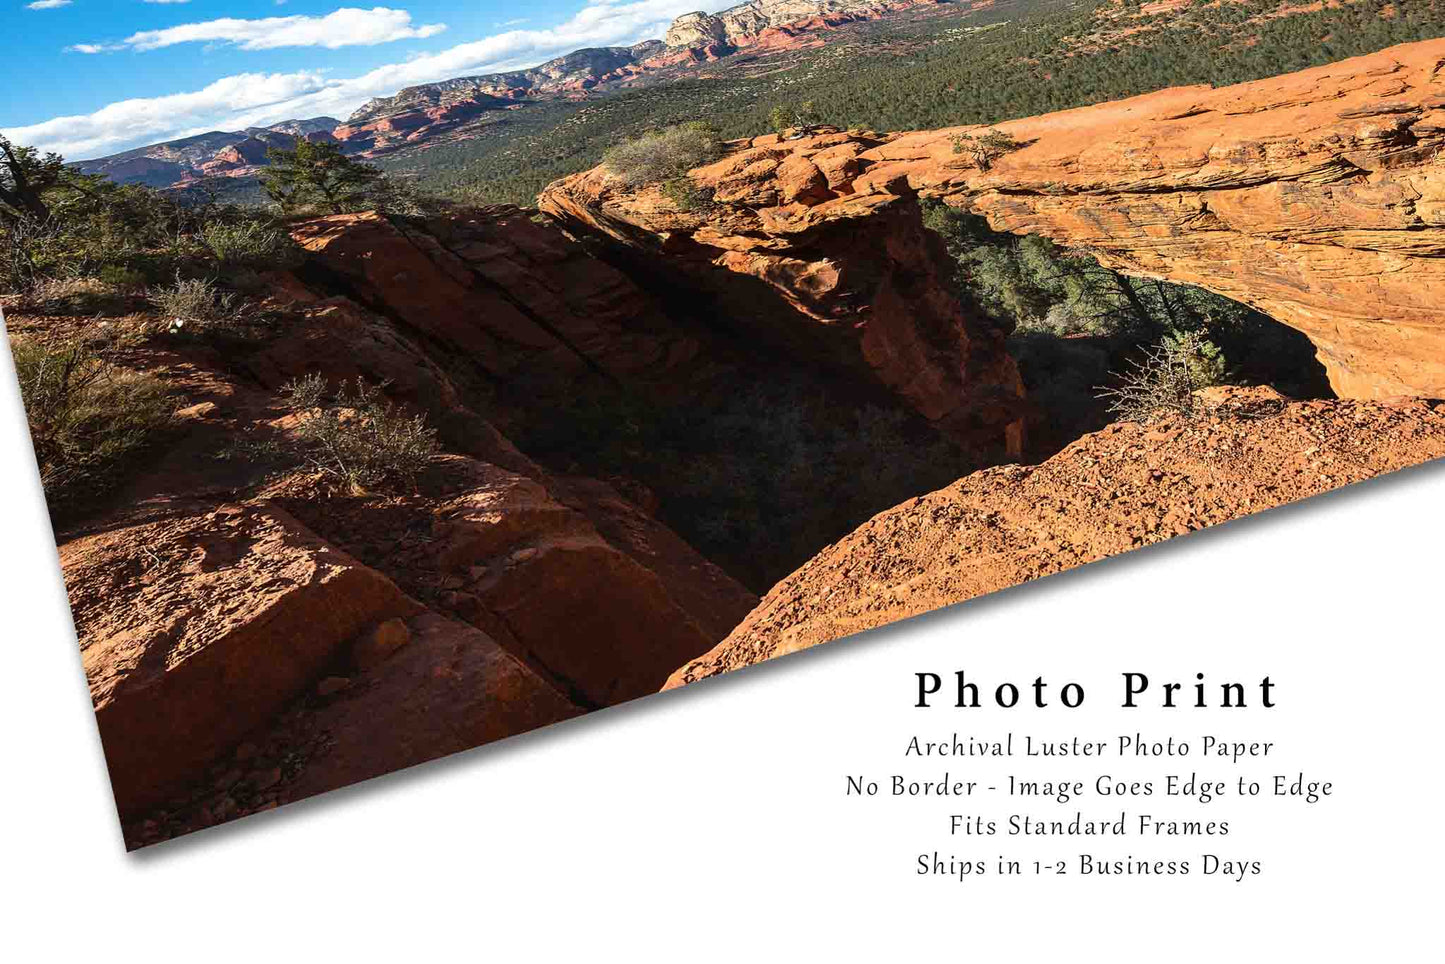 Arizona Landscape Photography Art Print - Picture of Devils Bridge on Clear Day Near Sedona Arizona Southwest Travel Decor Desert Photo